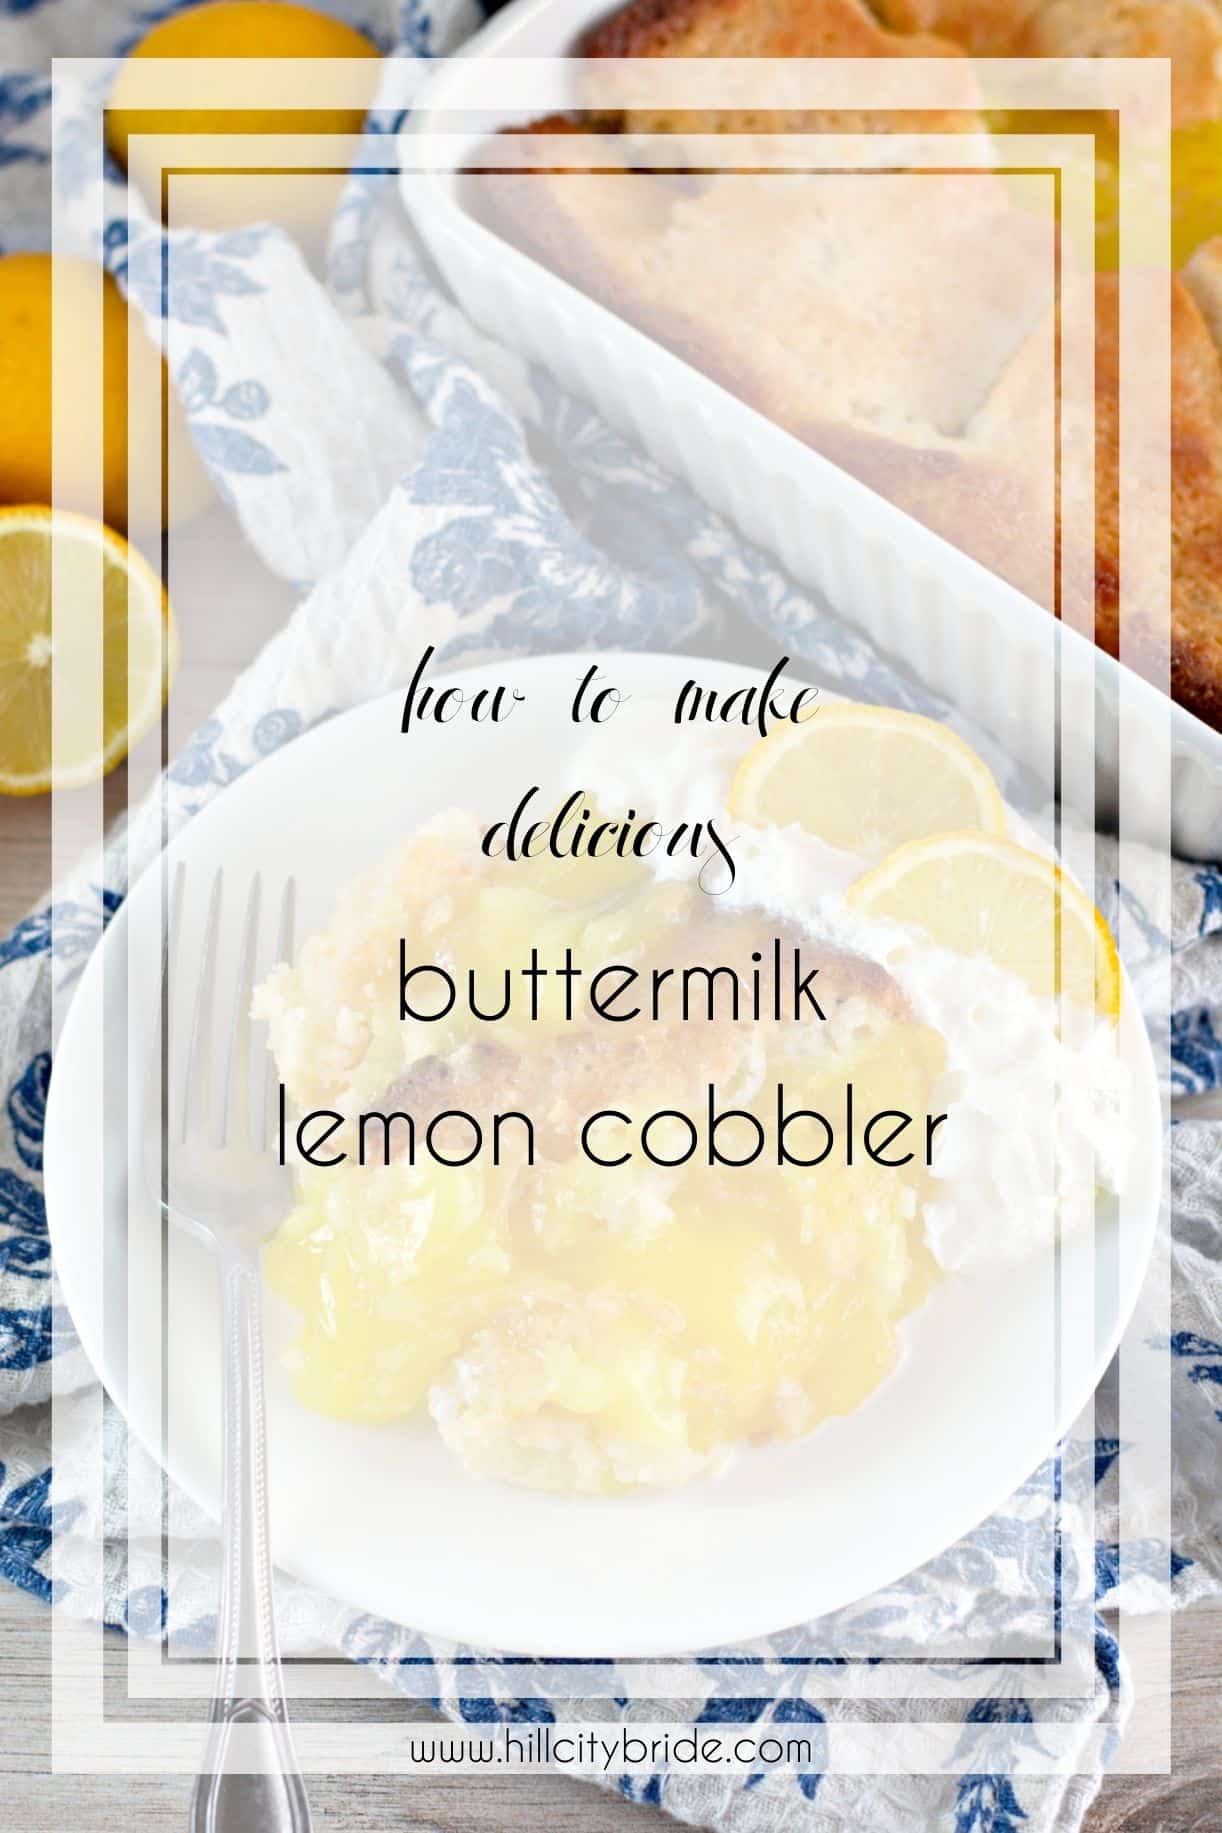 How to Make Delicious Buttermilk Lemon Cobbler for a Wedding Shower